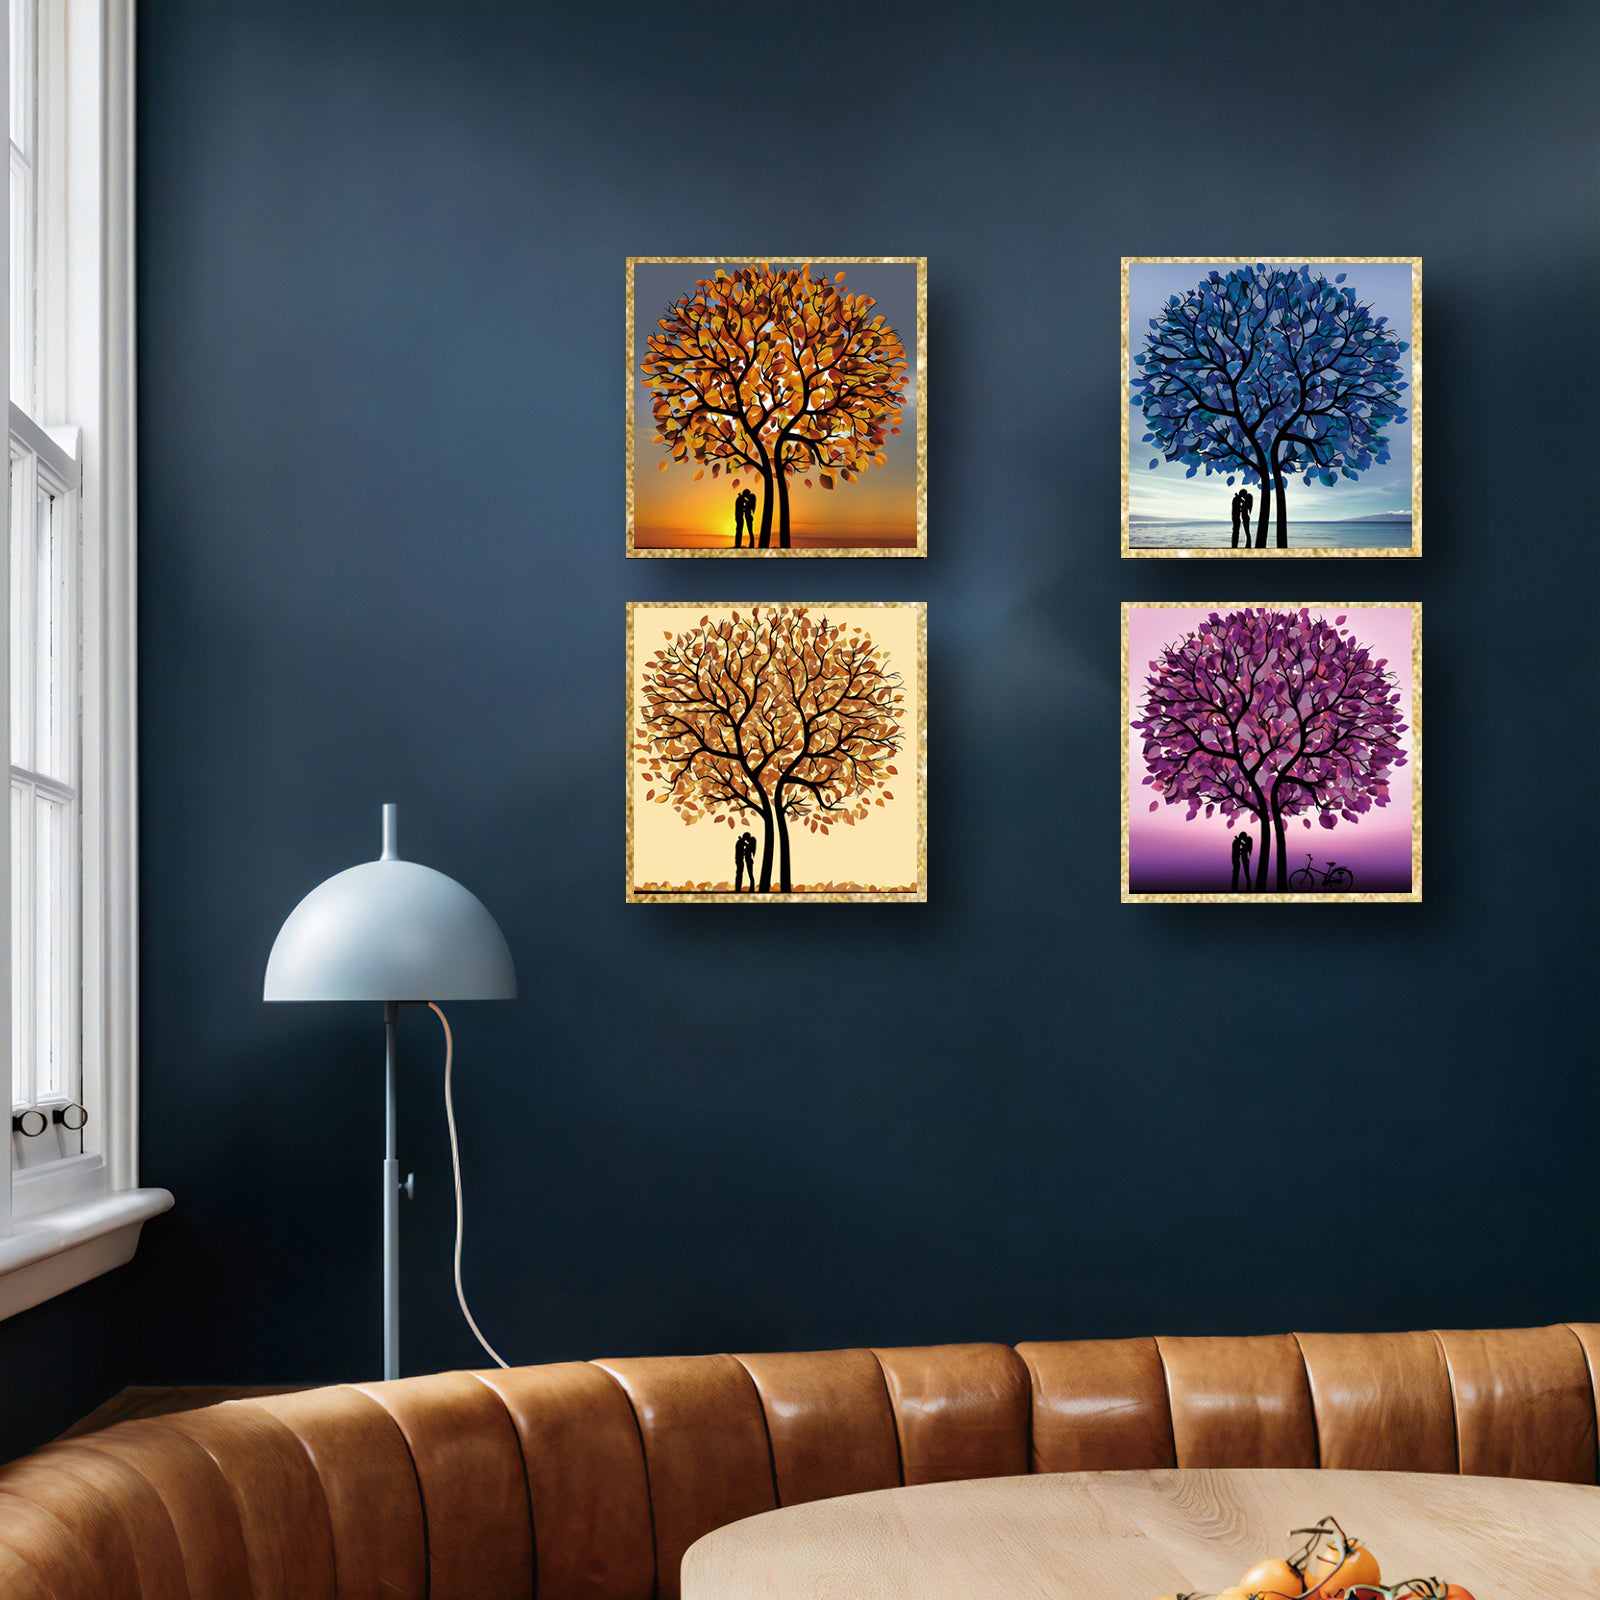 VOFFOV® Modern Wall Decor Tree Theme for Living Room